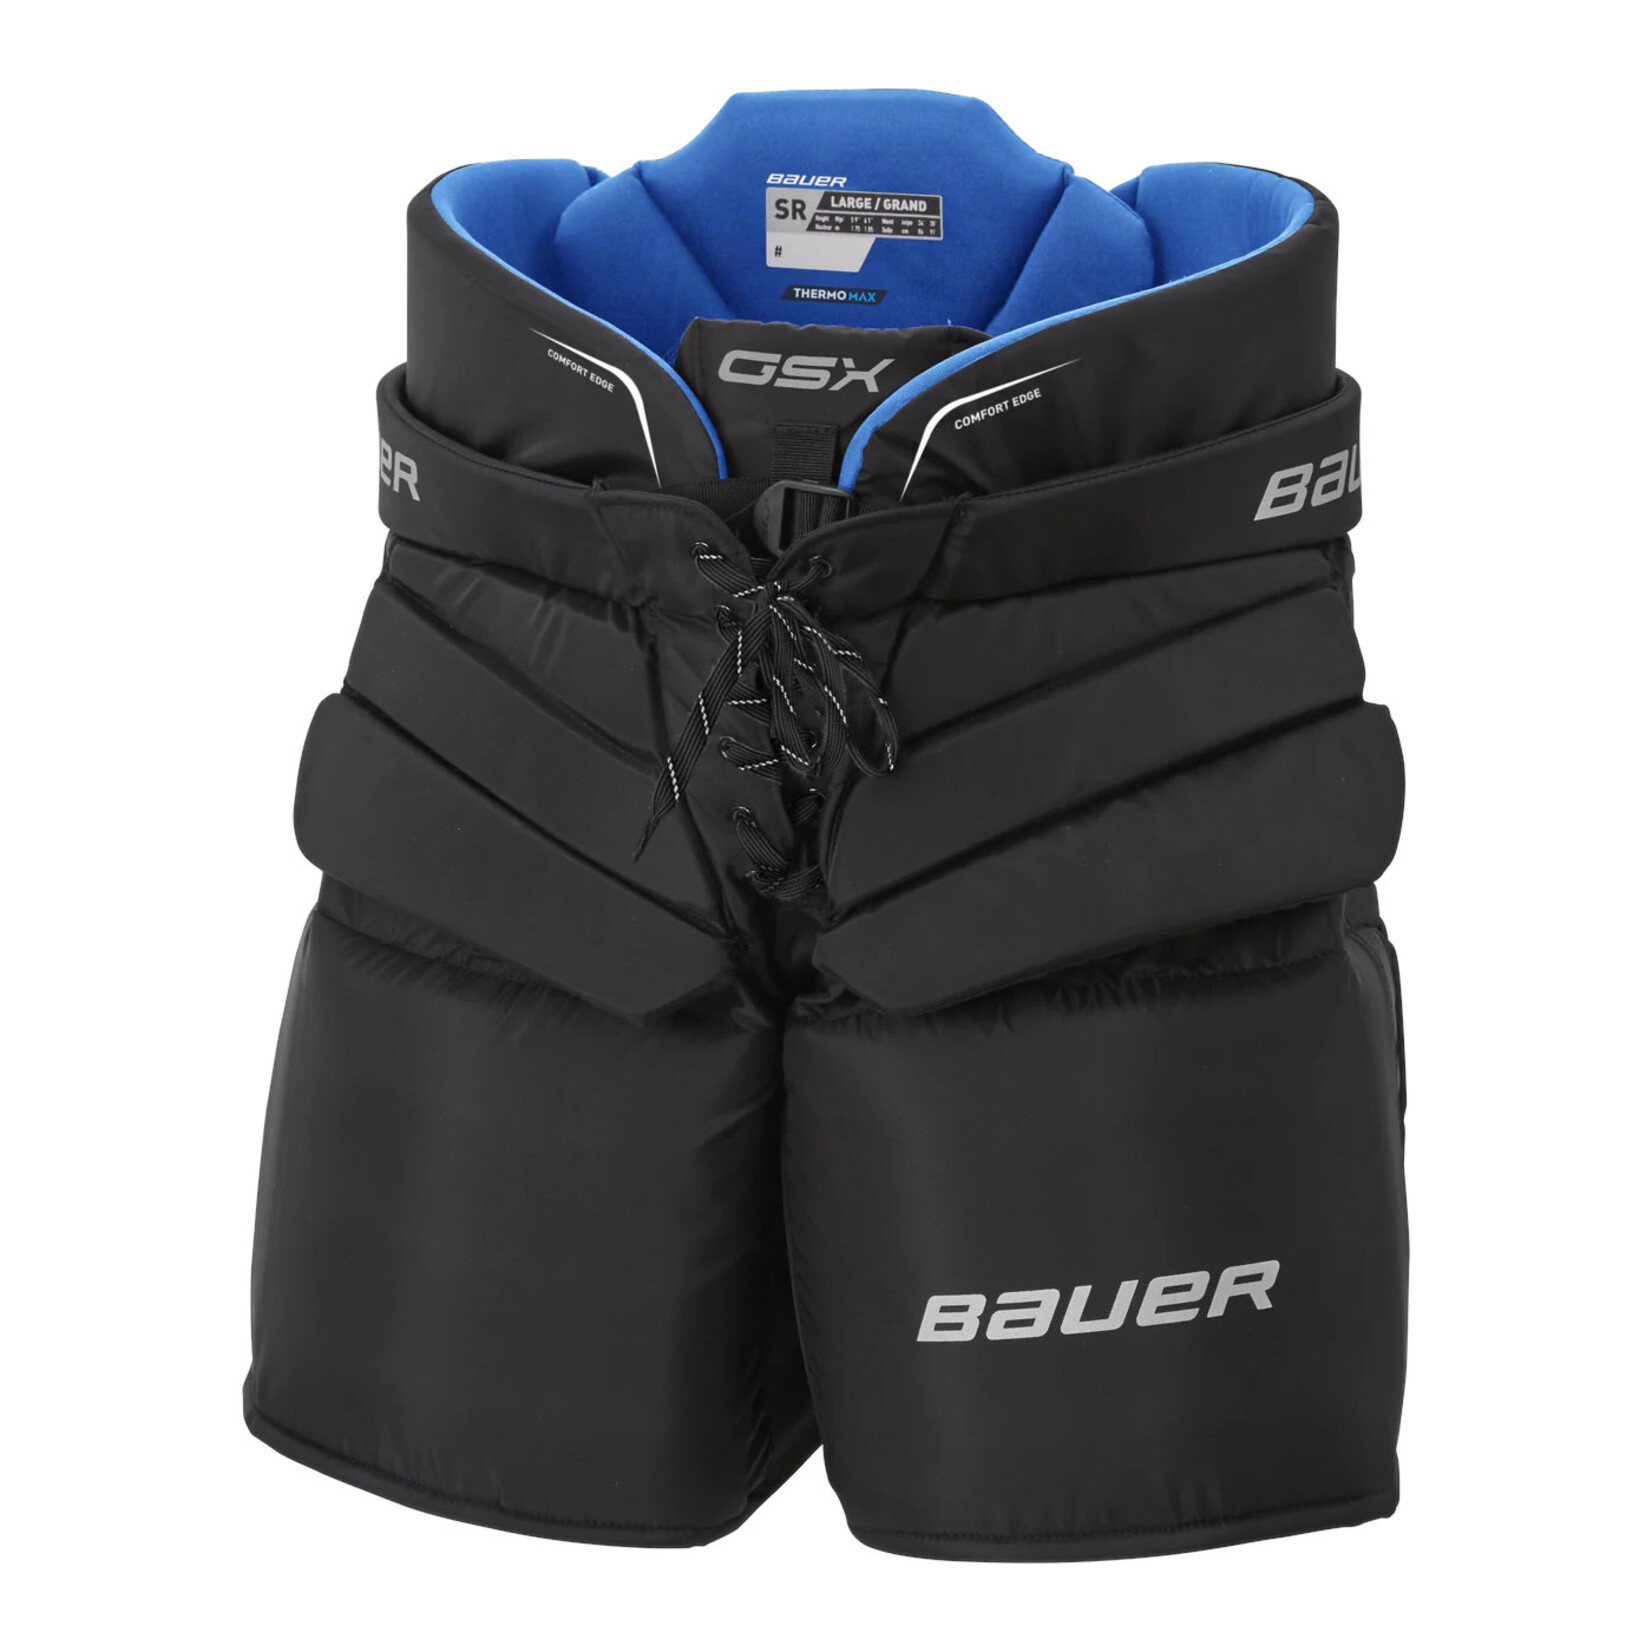 Bauer Bauer GSX - Hockey Goalie Pants Senior